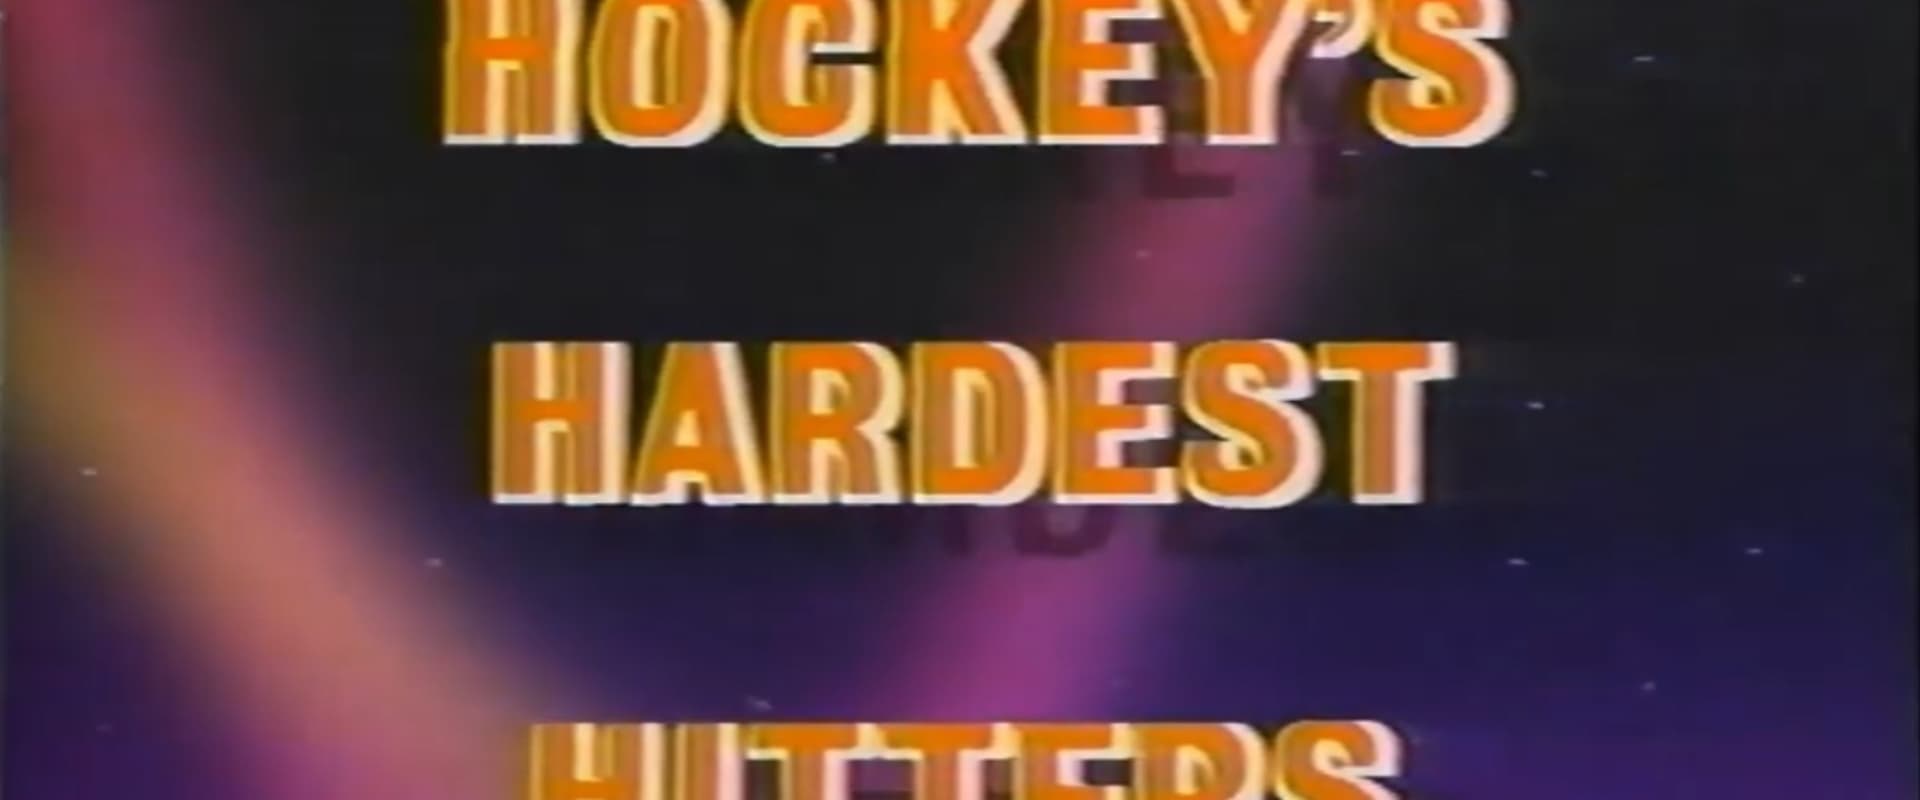 Hockey's Hardest Hitters